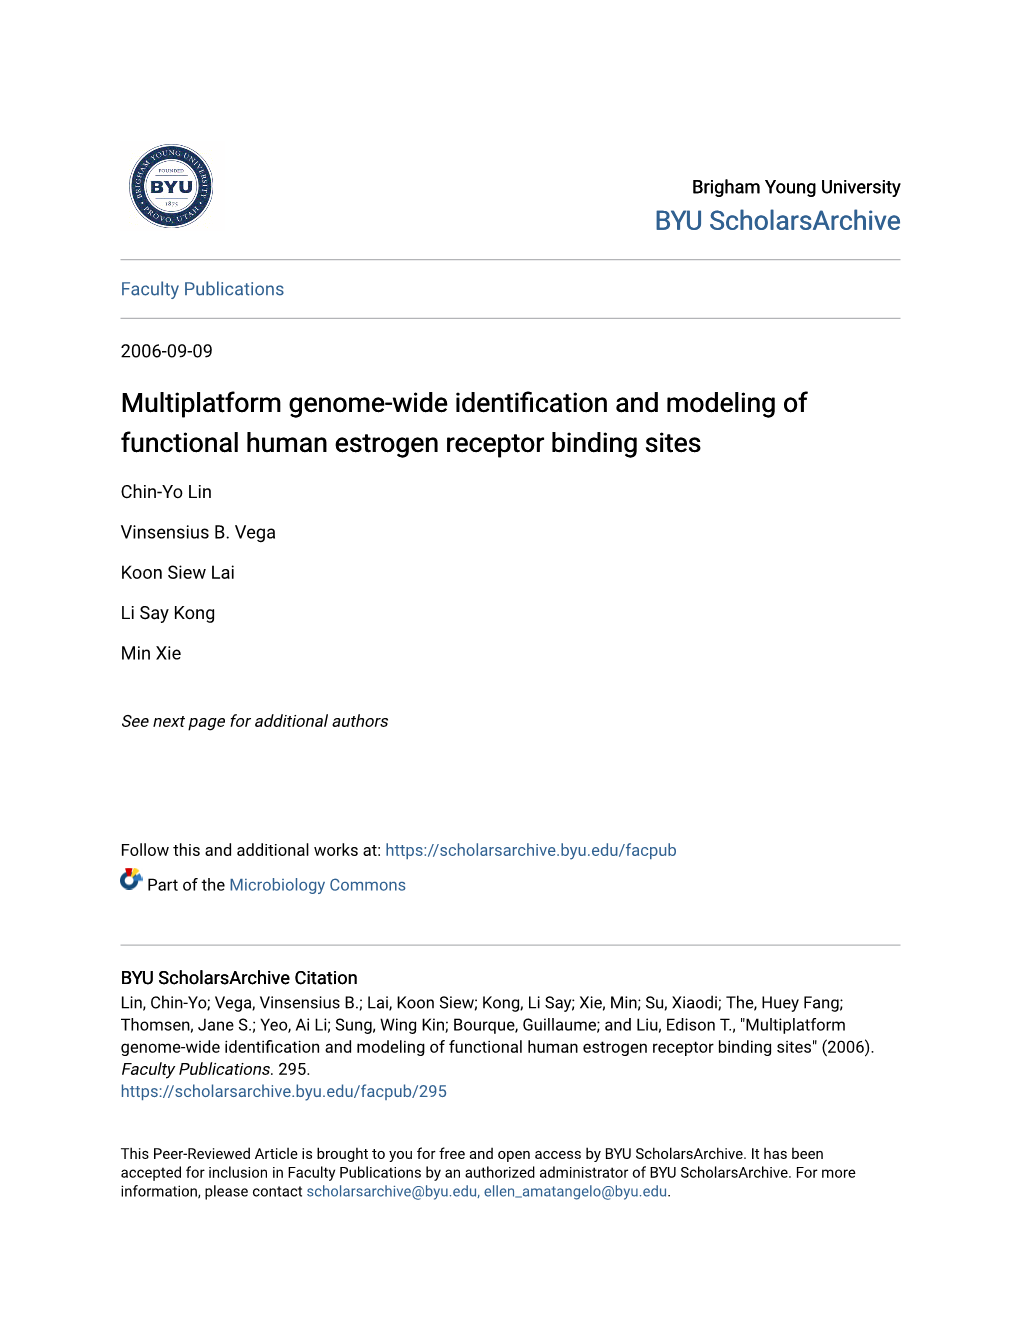 Multiplatform Genome-Wide Identification and Modeling of Functional Human Estrogen Receptor Binding Sites